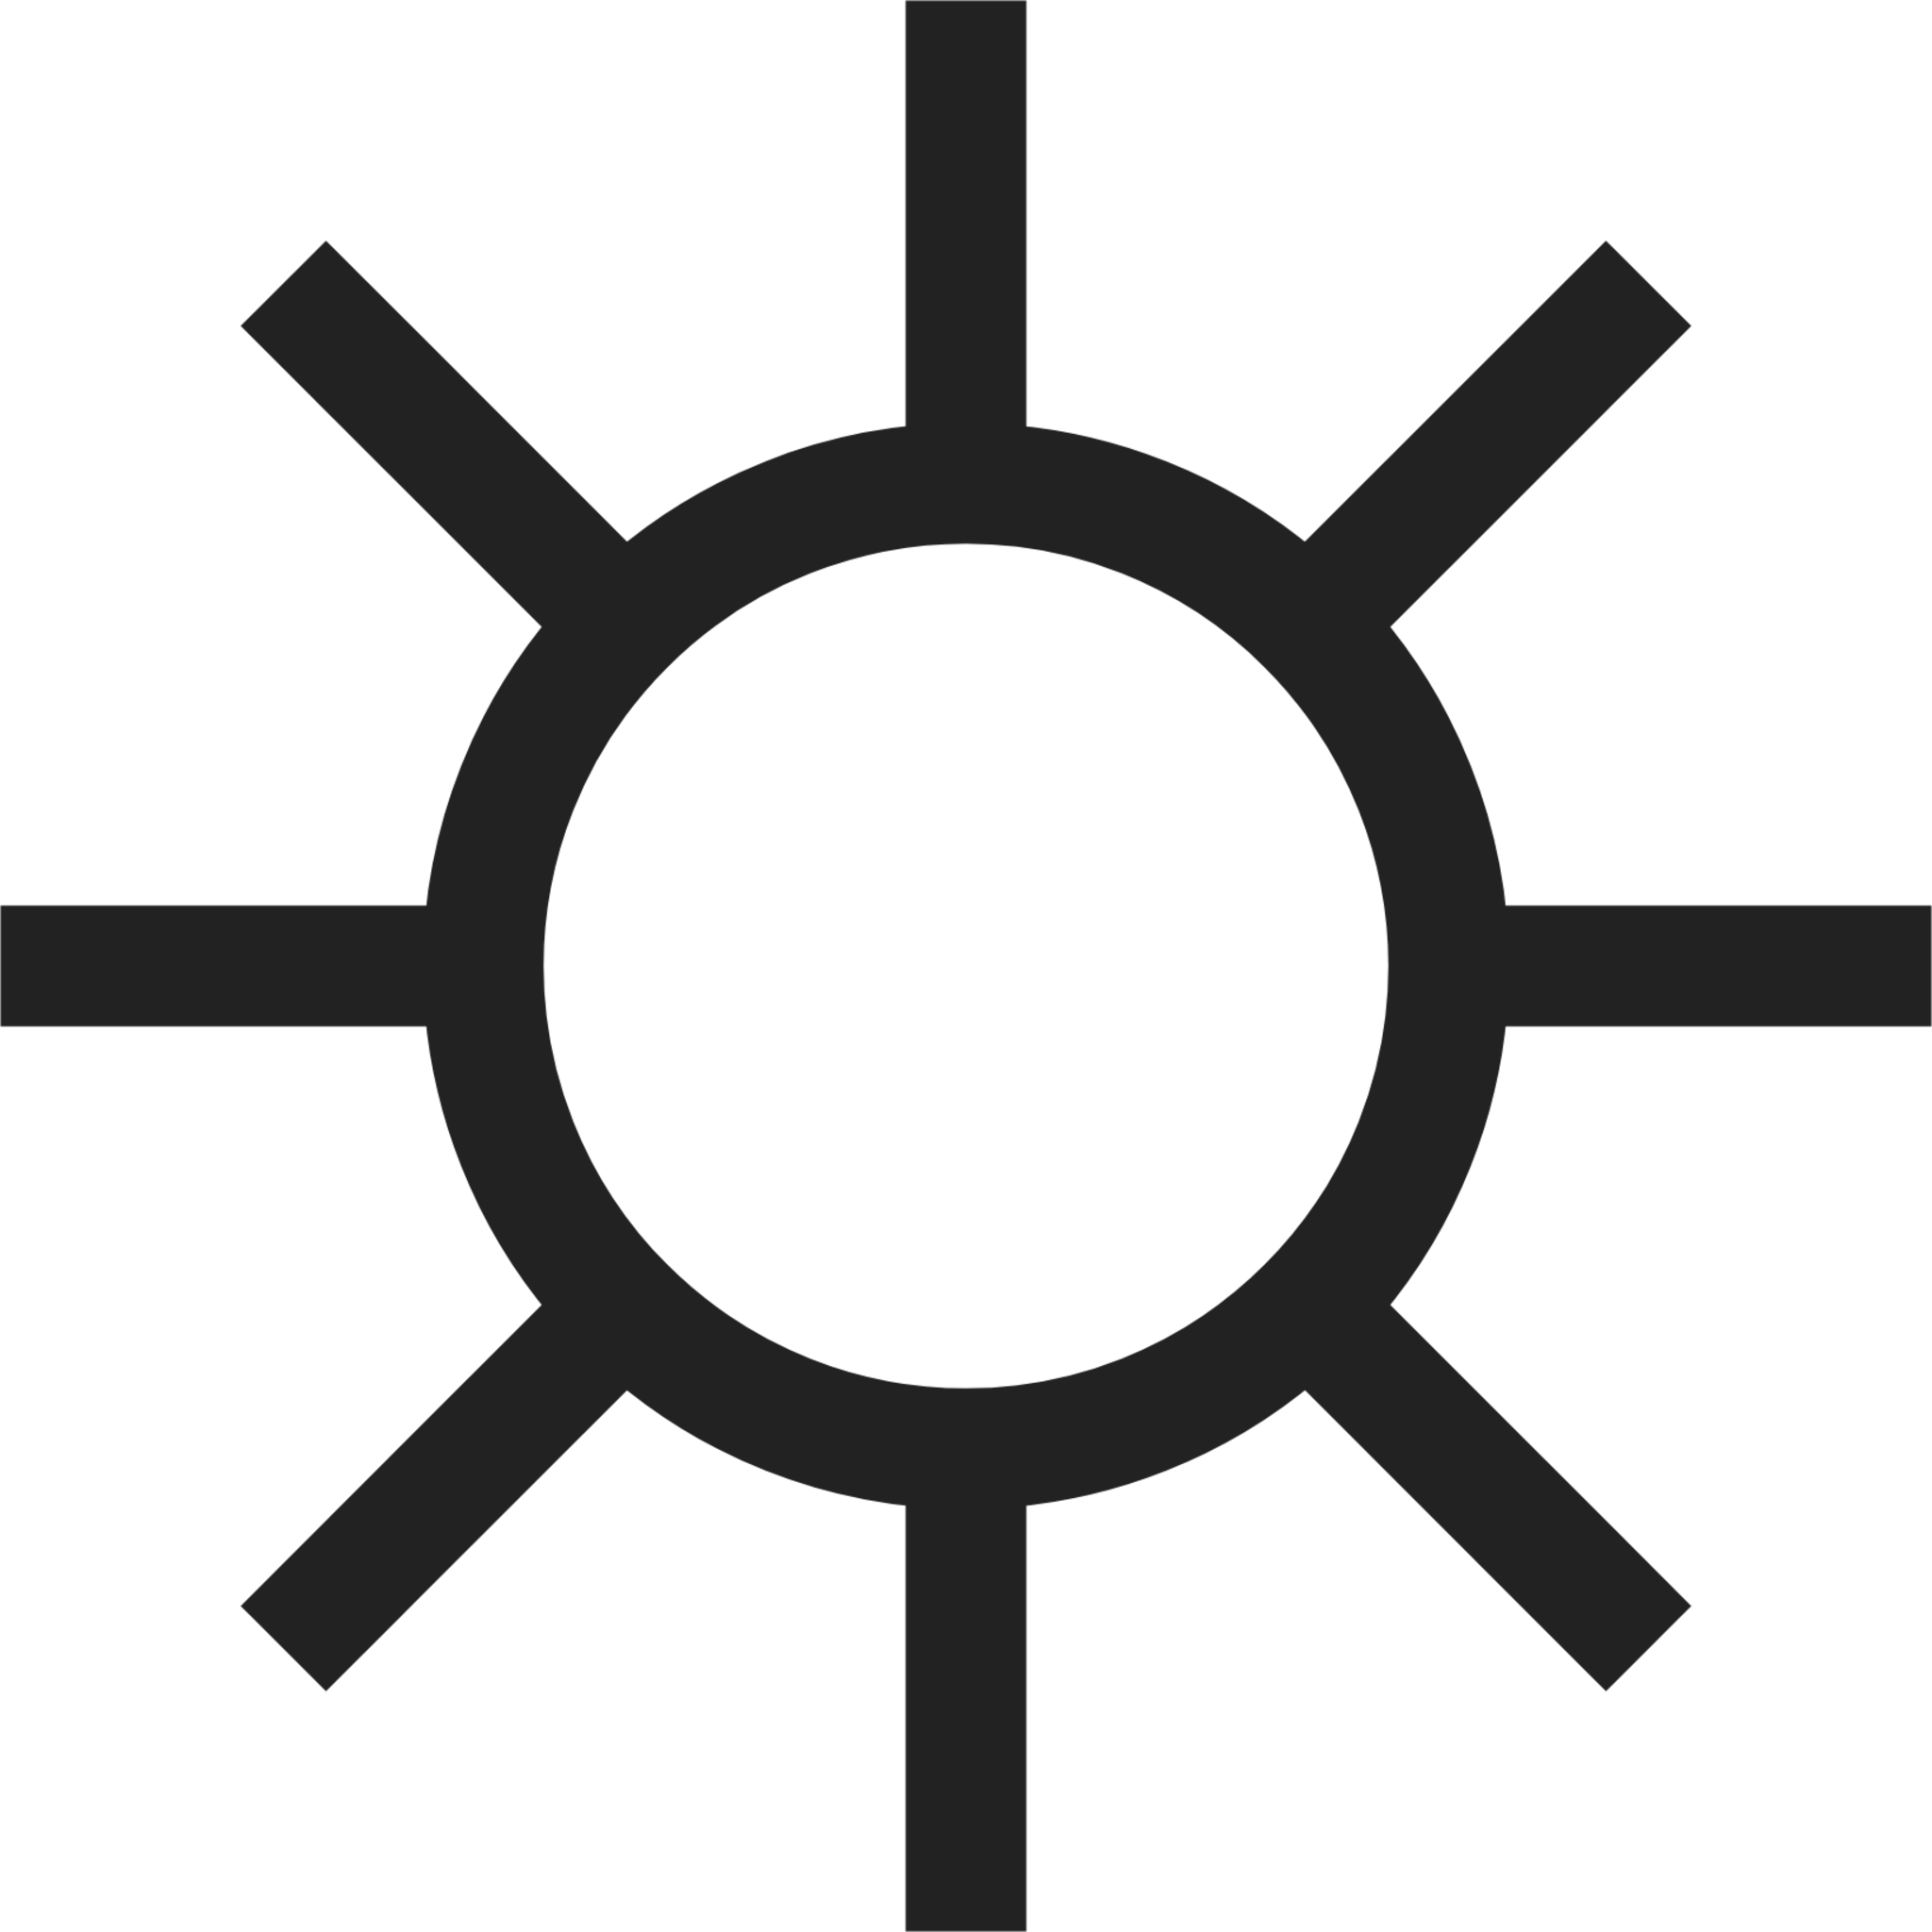 Sunlight light icon